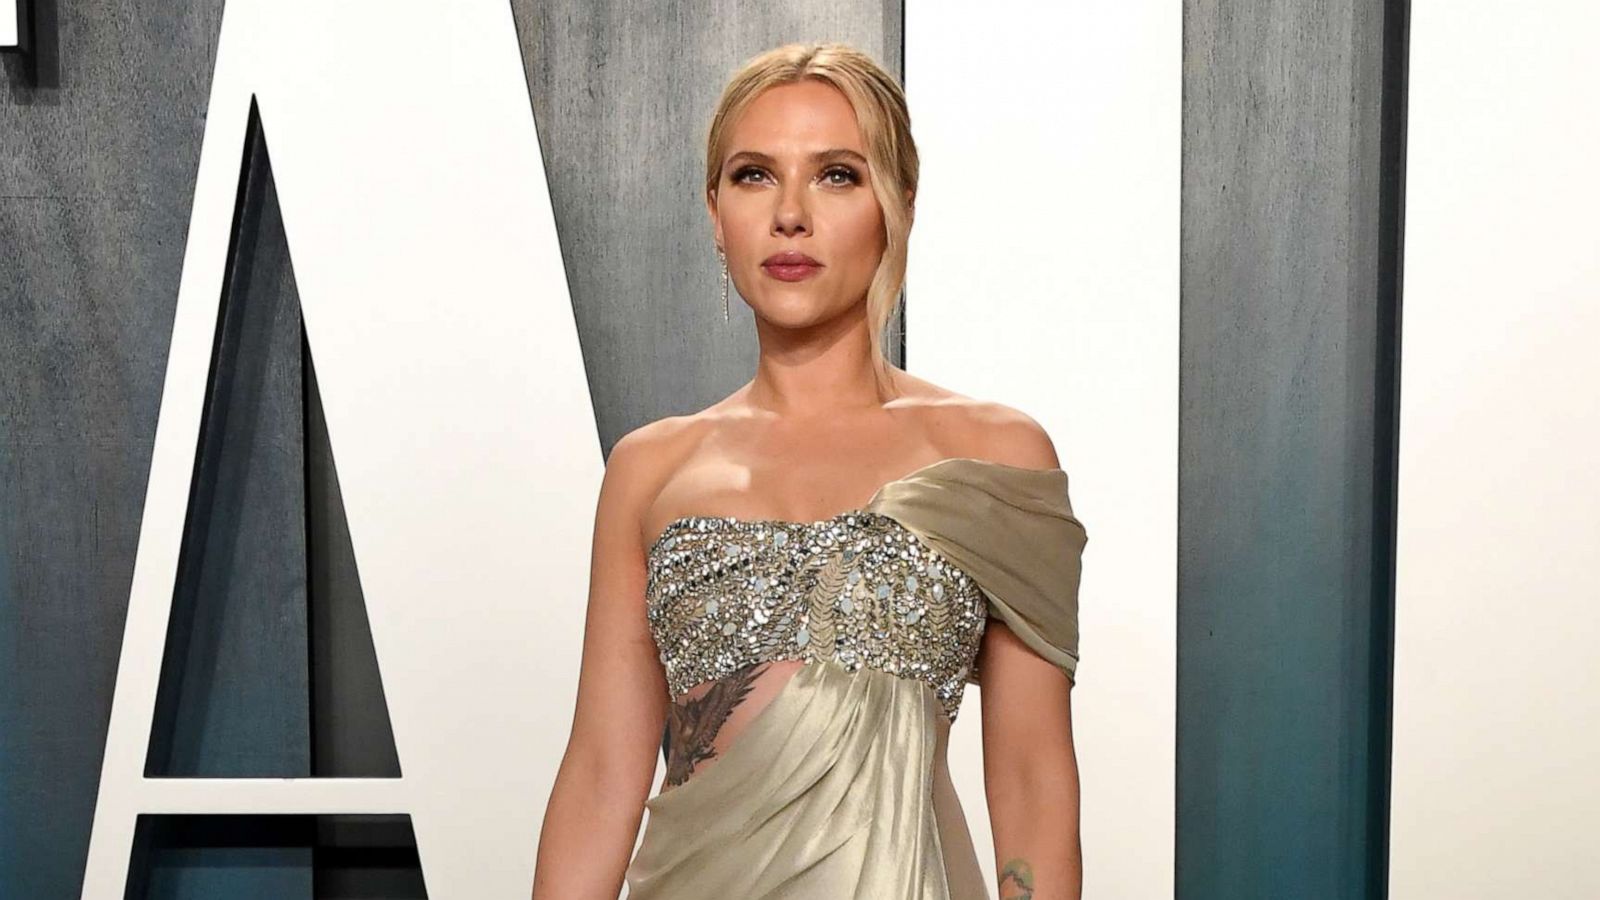 Scarlett Johansson Showed Home Alone 3 to Her Daughter